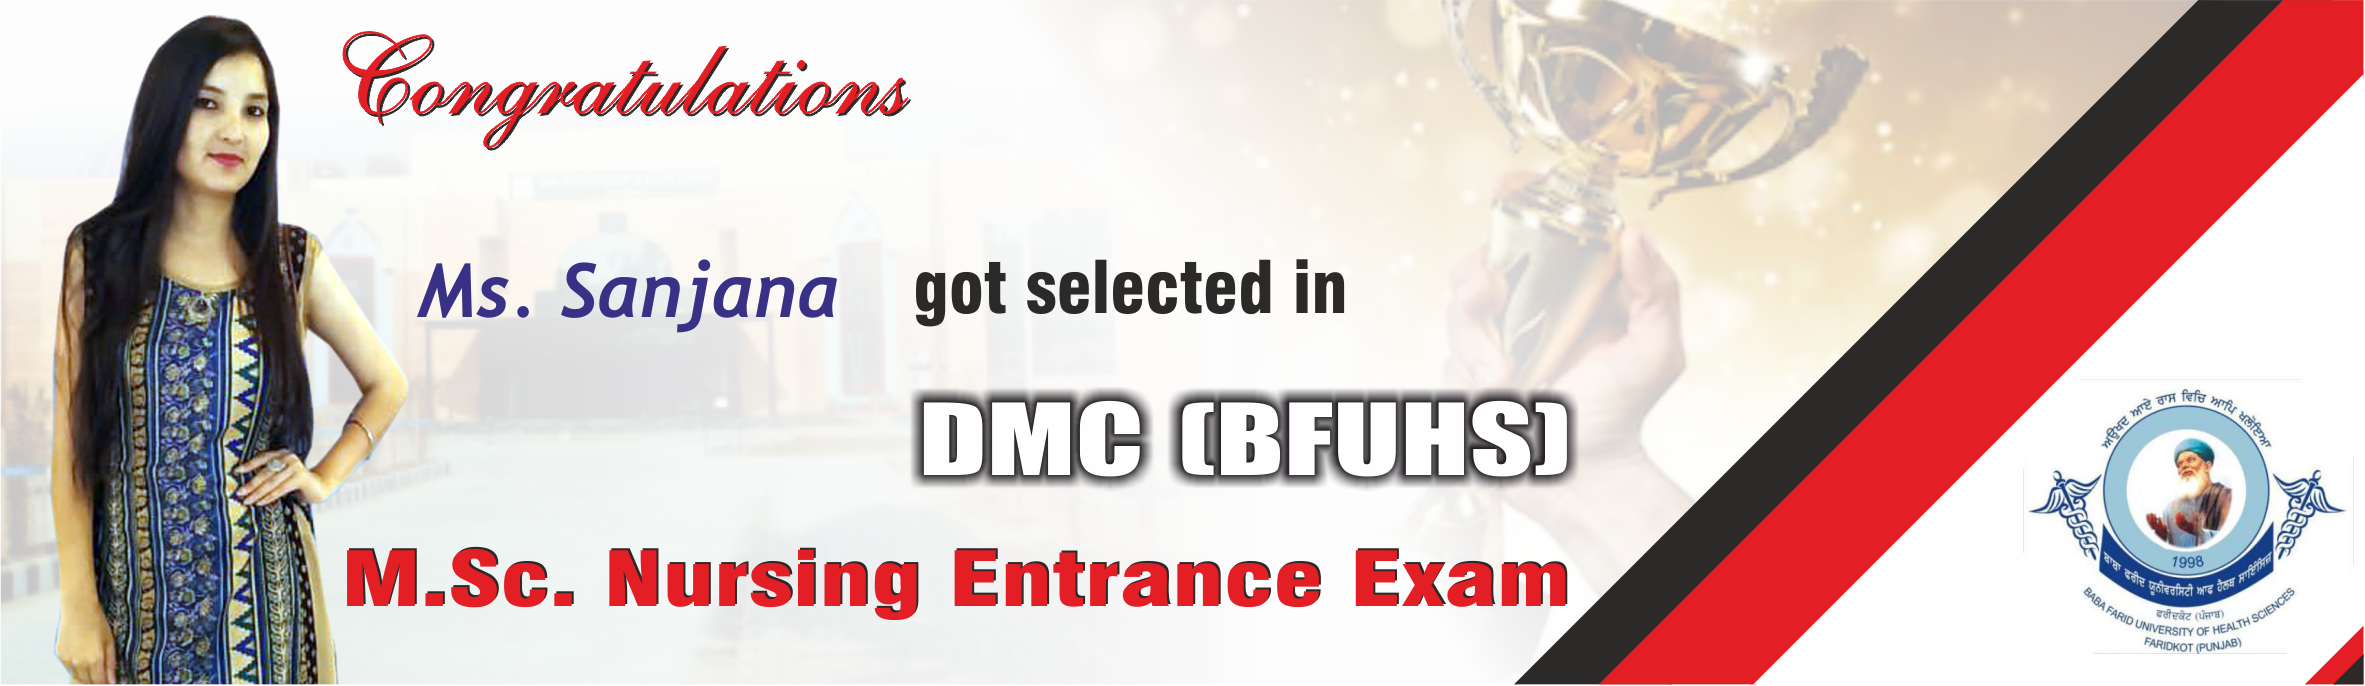 2-sanjana got selected in dmc (bfuhs) msc nursing entrance